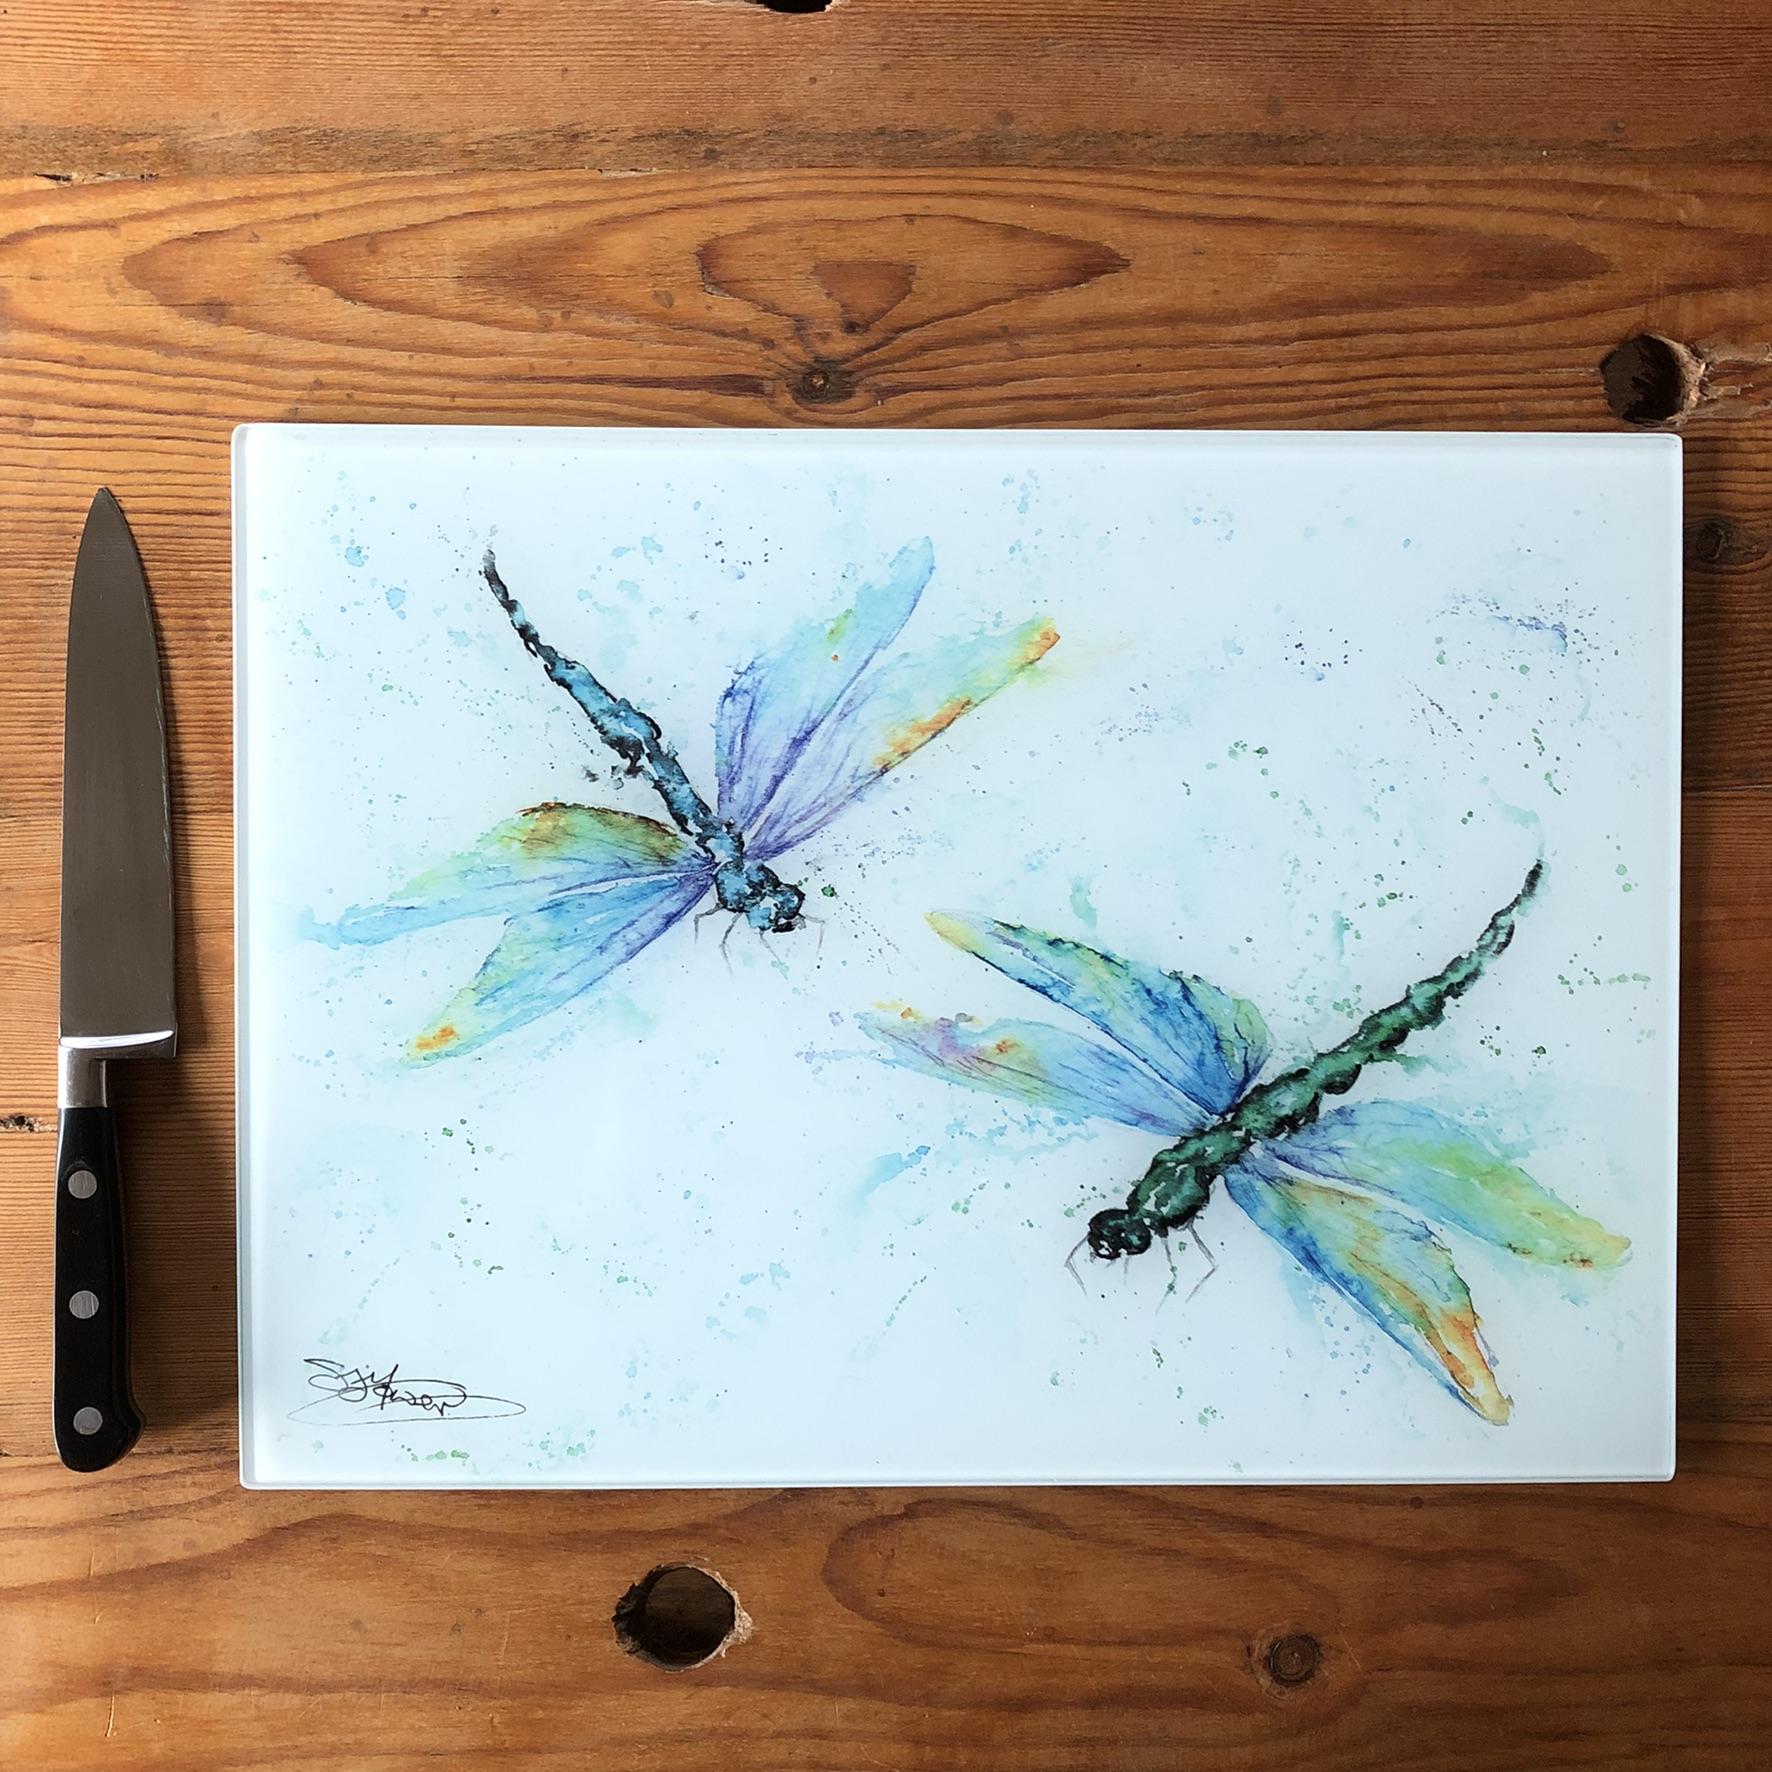 dragonfly glass worktop saver